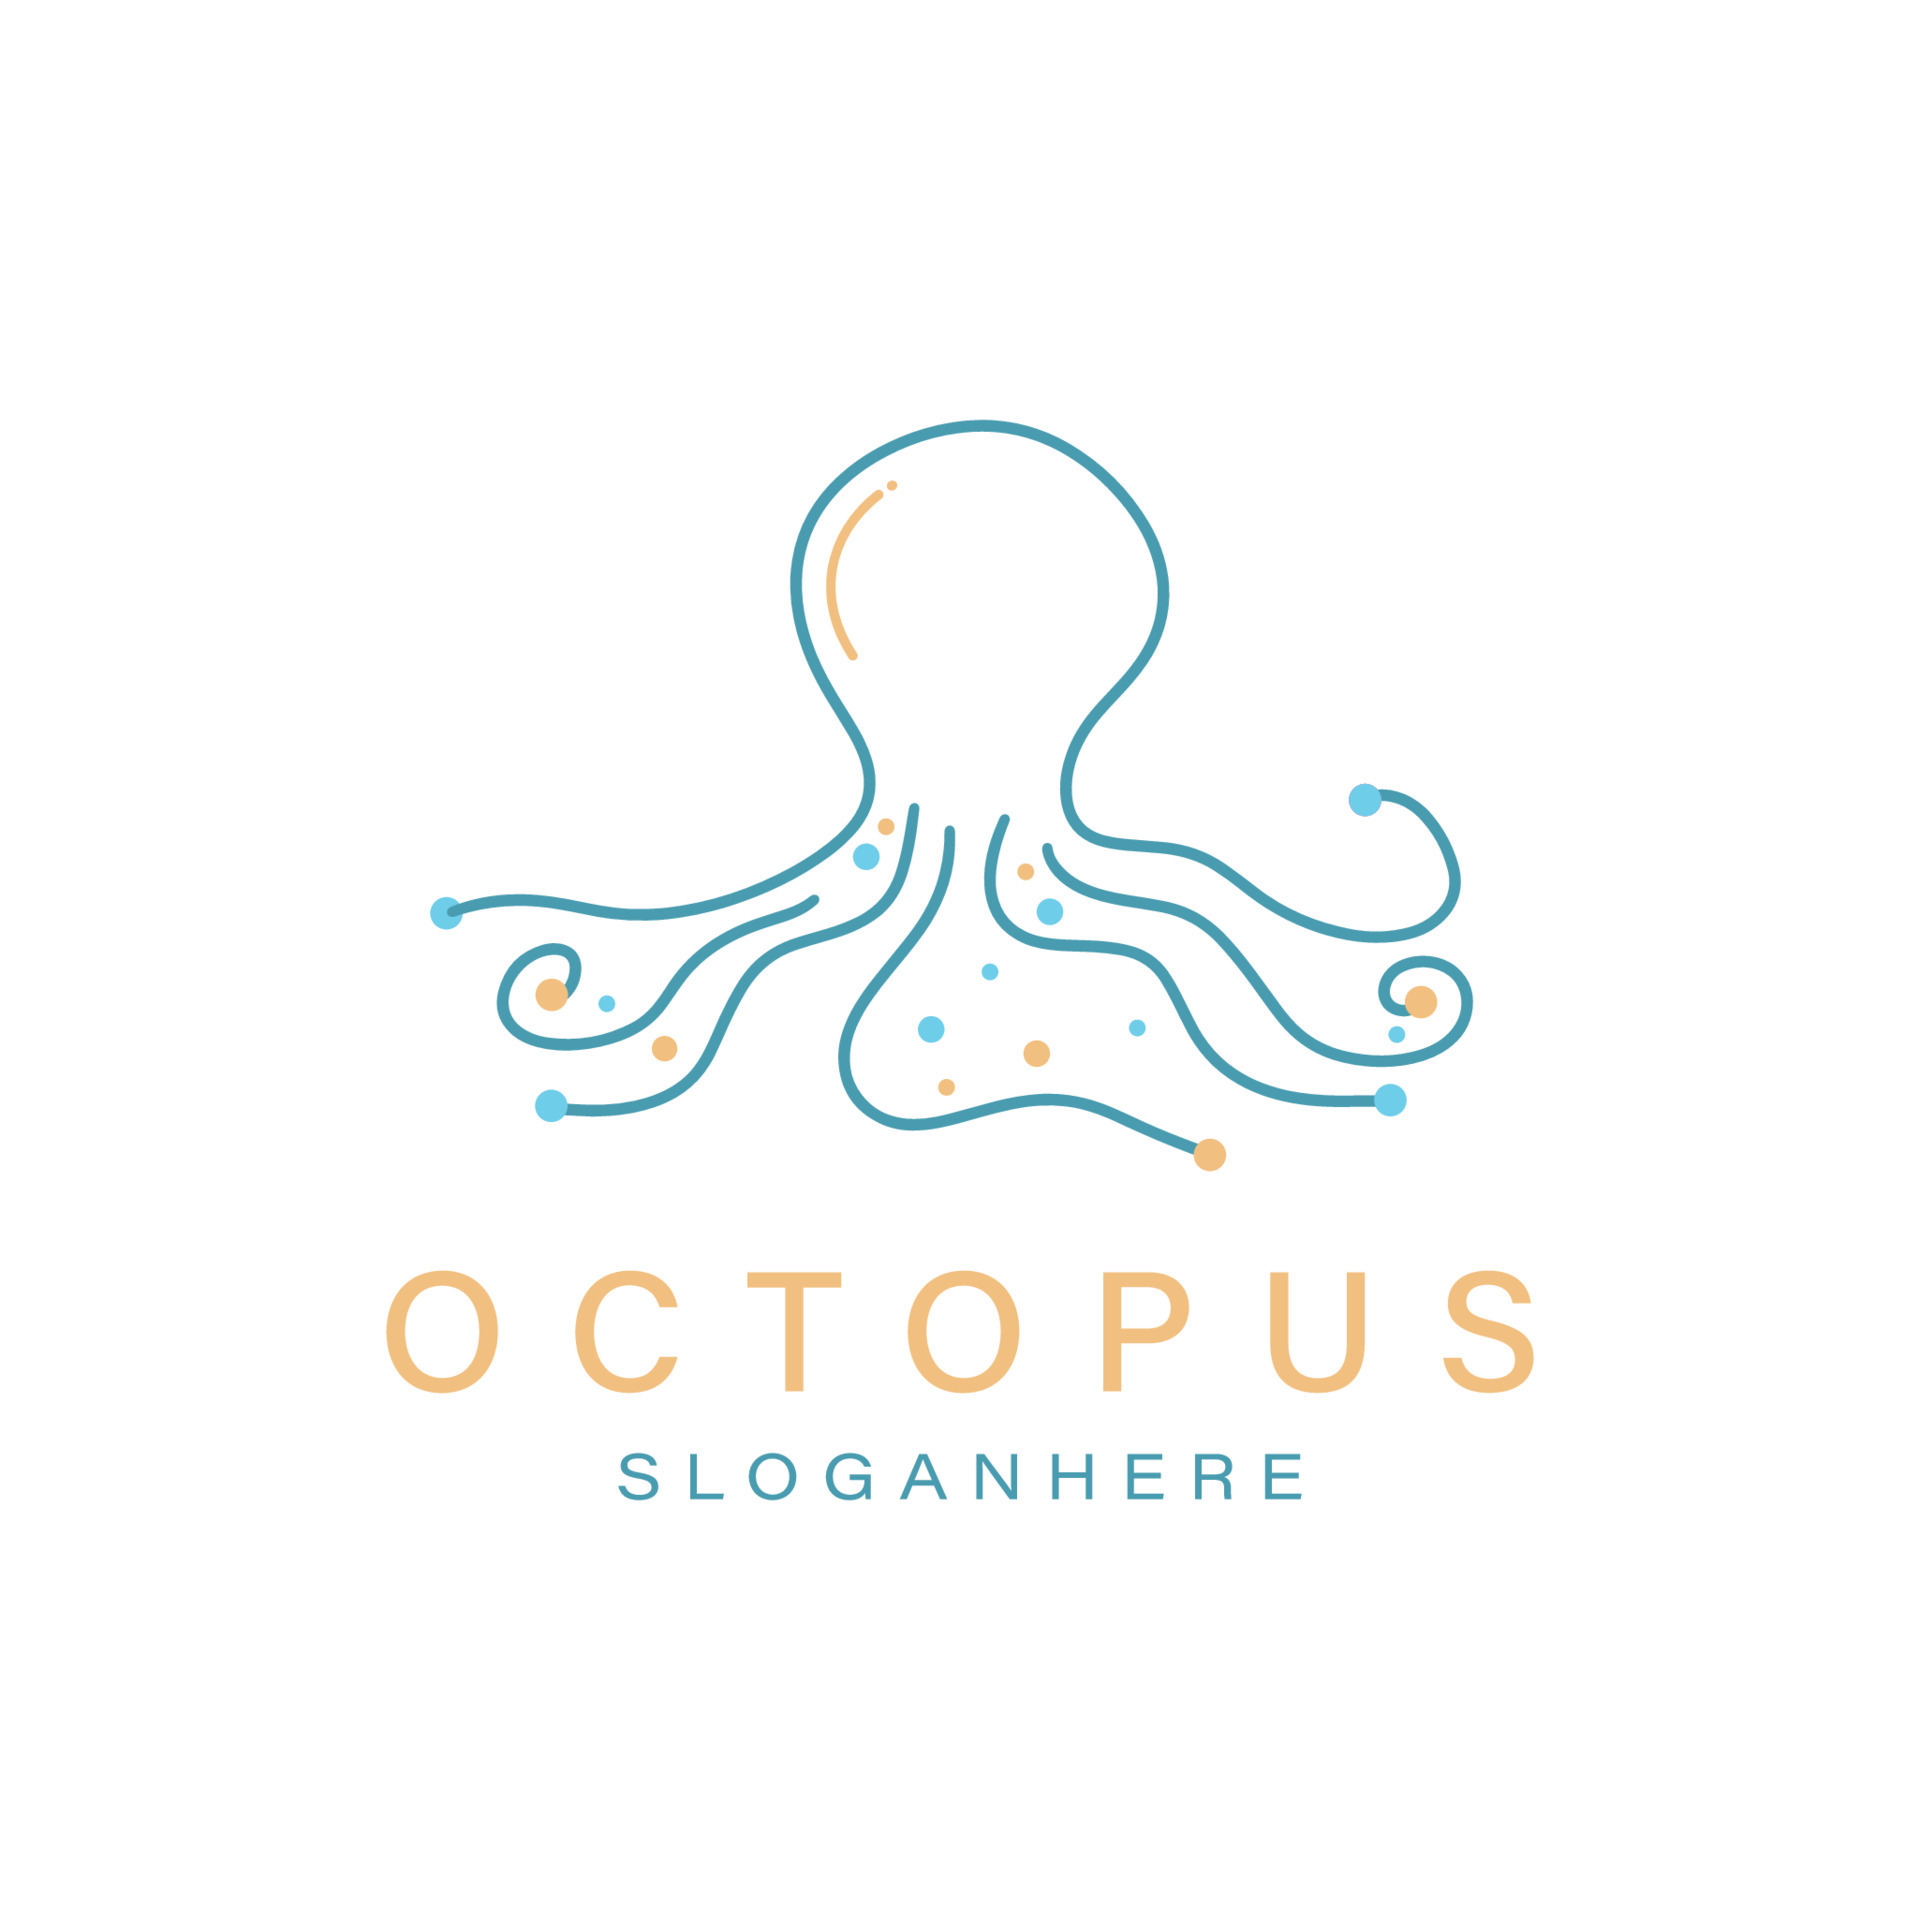 Octopus Cuttlefish Squid Tentacles Logo Design Template Monoline Style ...